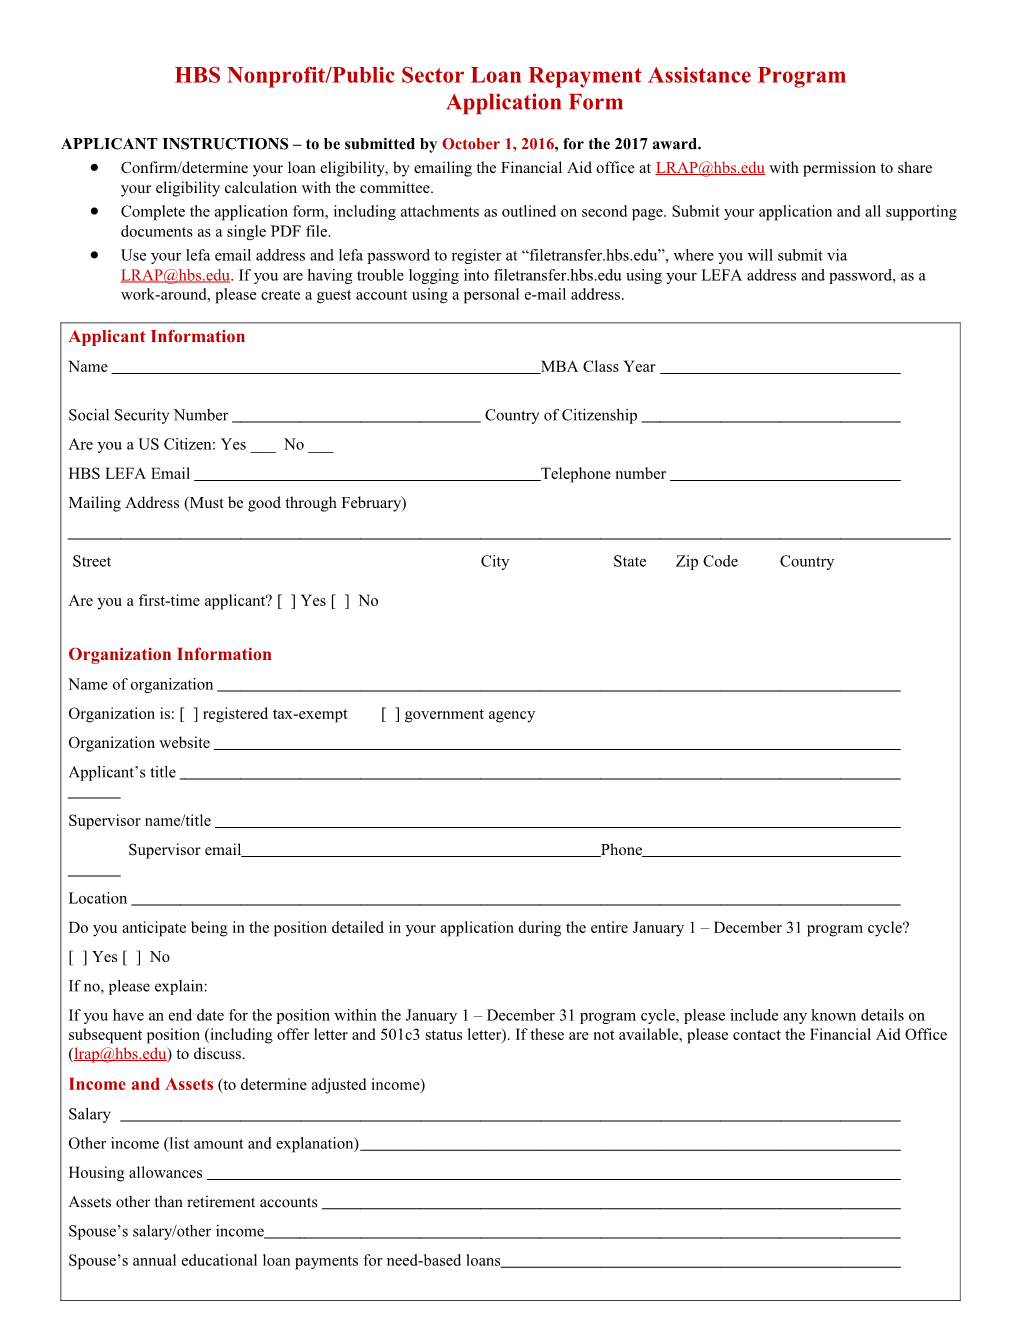 HBS Nonprofit/Public Sector Loan Repayment Assistance Programapplication Form